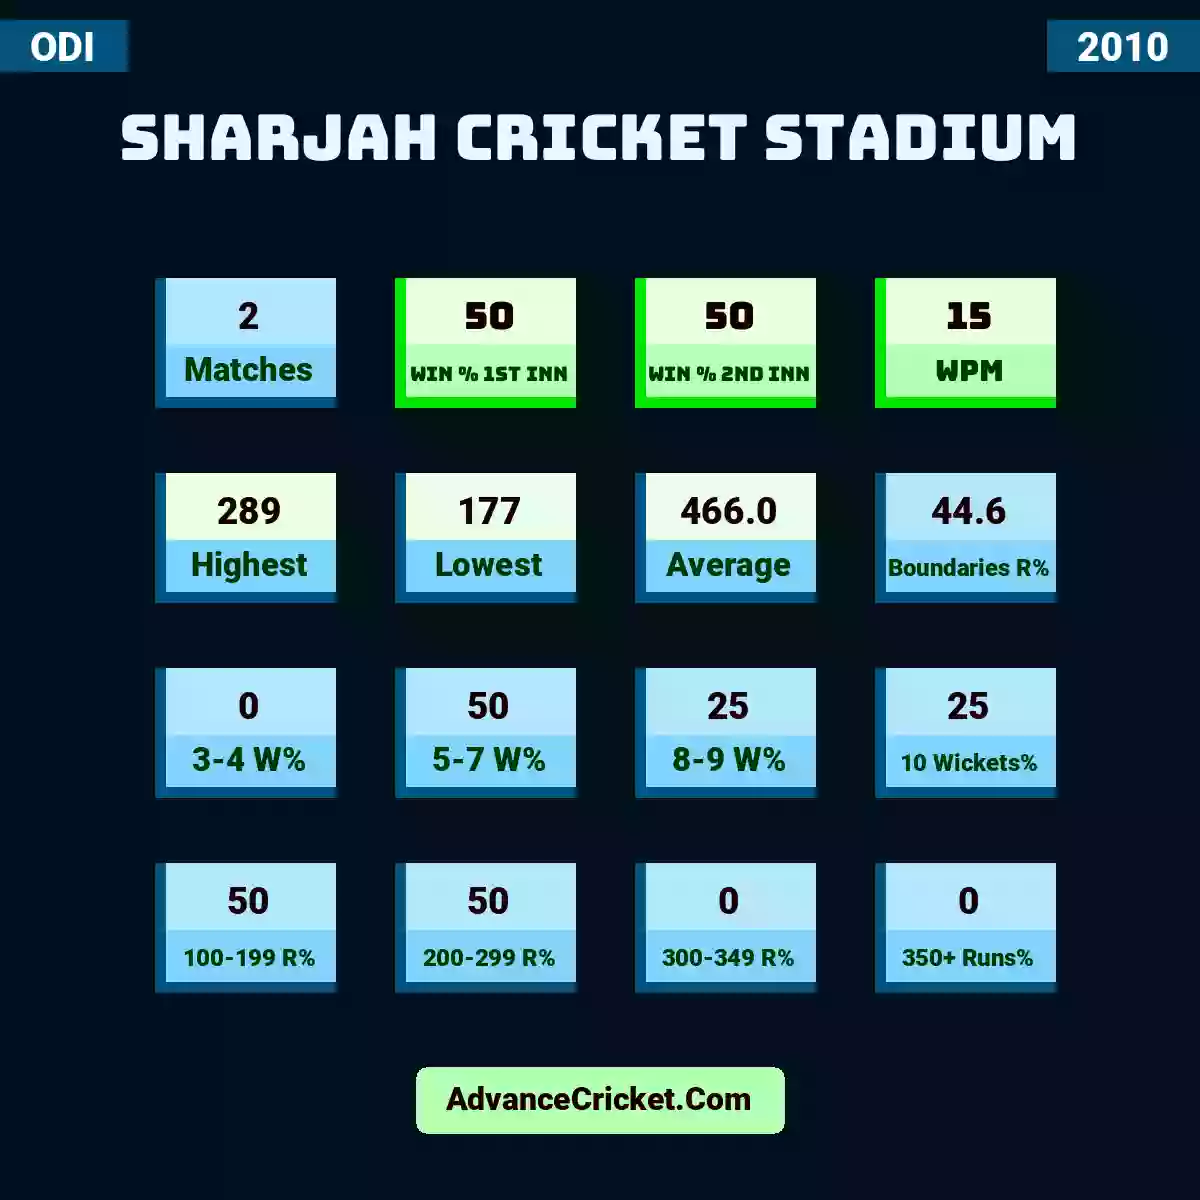 Image showing Sharjah Cricket Stadium with Matches: 2, Win % 1st Inn: 50, Win % 2nd Inn: 50, WPM: 15, Highest: 289, Lowest: 177, Average: 466.0, Boundaries R%: 44.6, 3-4 W%: 0, 5-7 W%: 50, 8-9 W%: 25, 10 Wickets%: 25, 100-199 R%: 50, 200-299 R%: 50, 300-349 R%: 0, 350+ Runs%: 0.